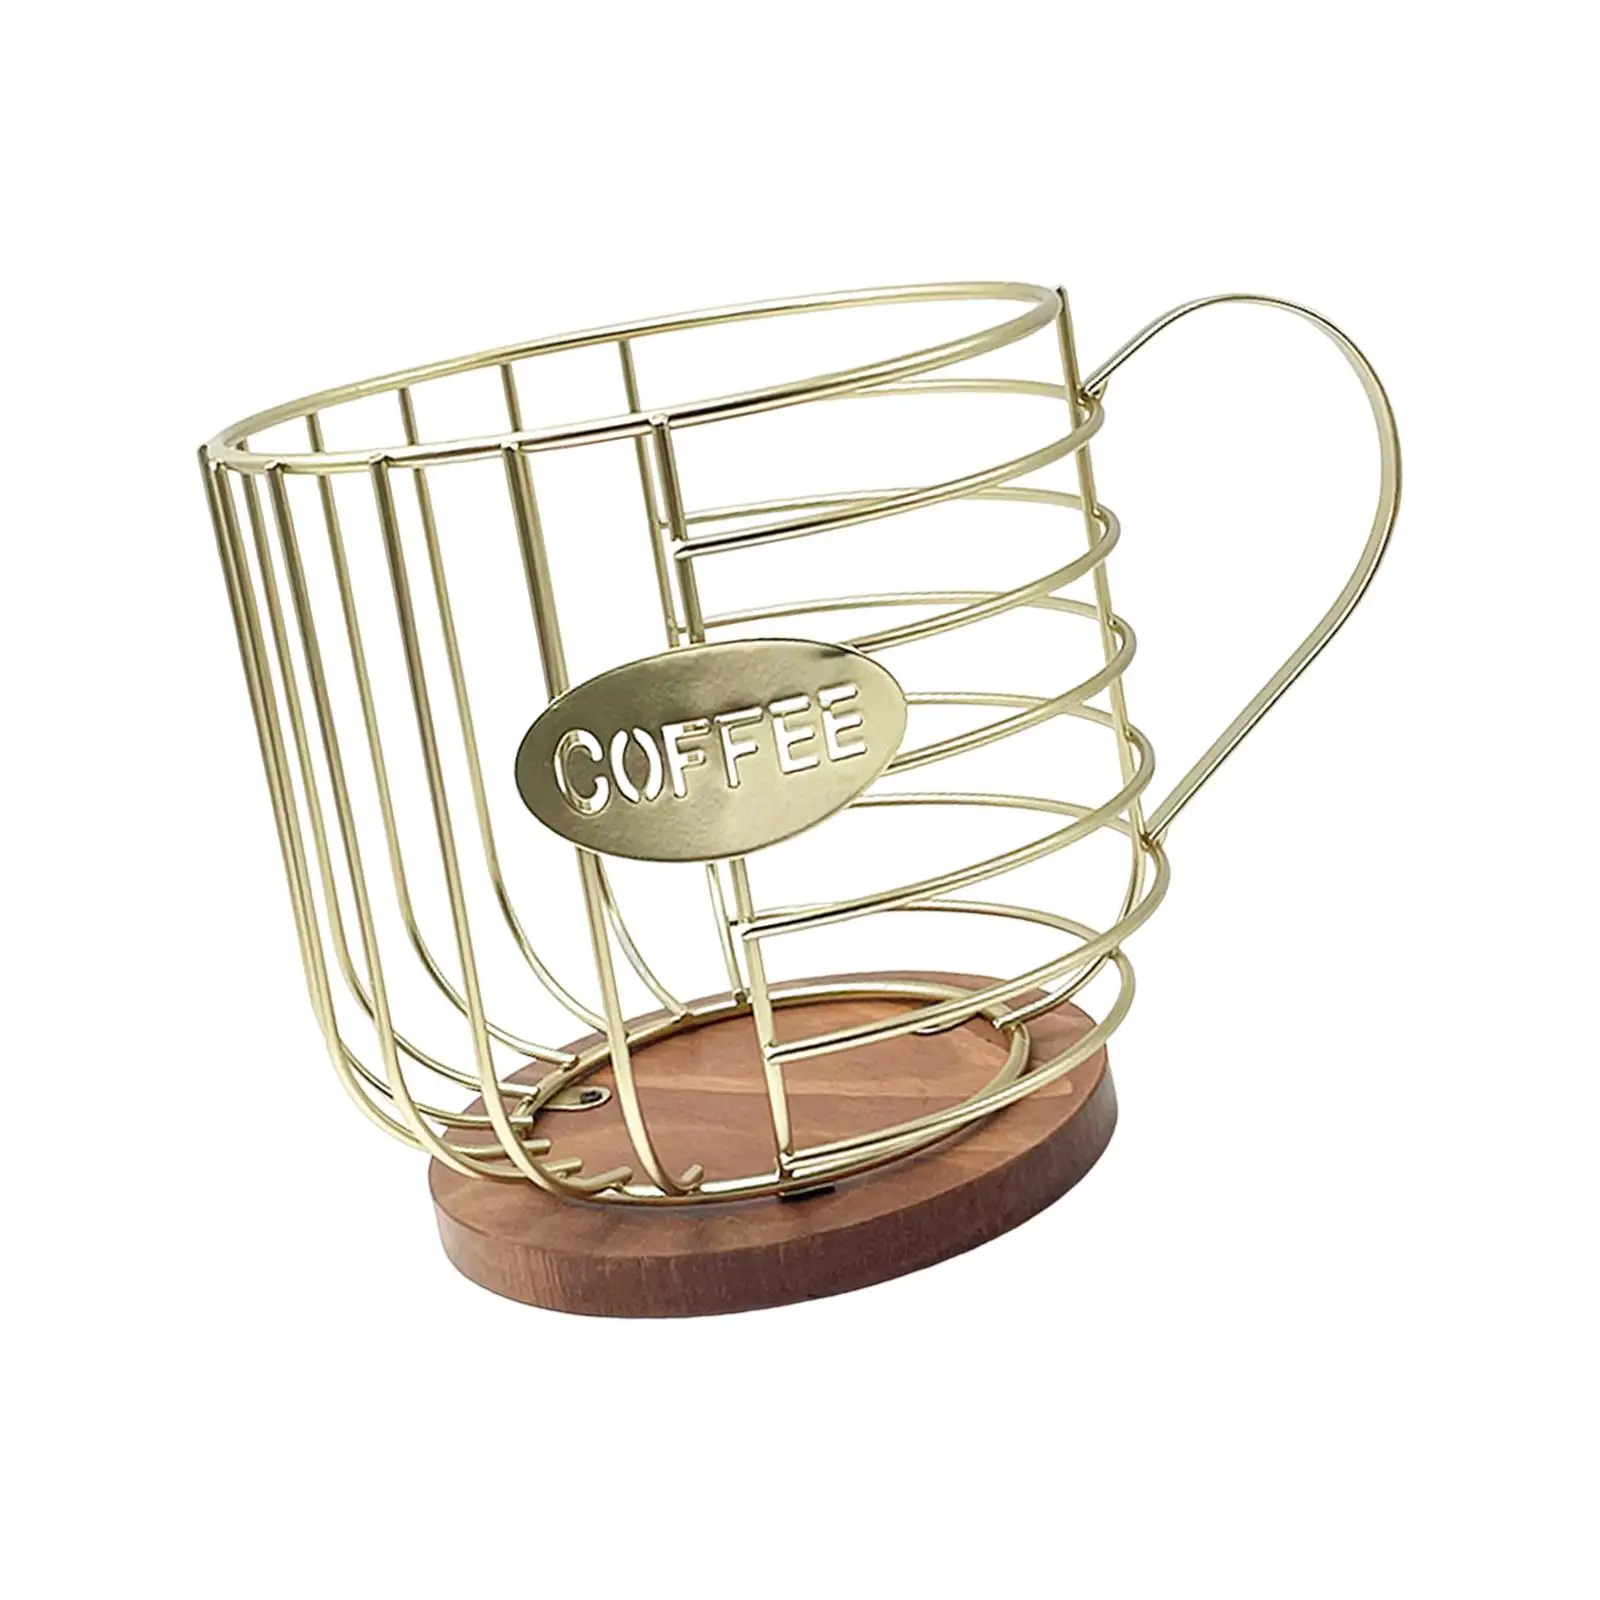 Coffee Pod Holder, Coffee Pod Basket Organizer, Coffee Pod Container, Storage